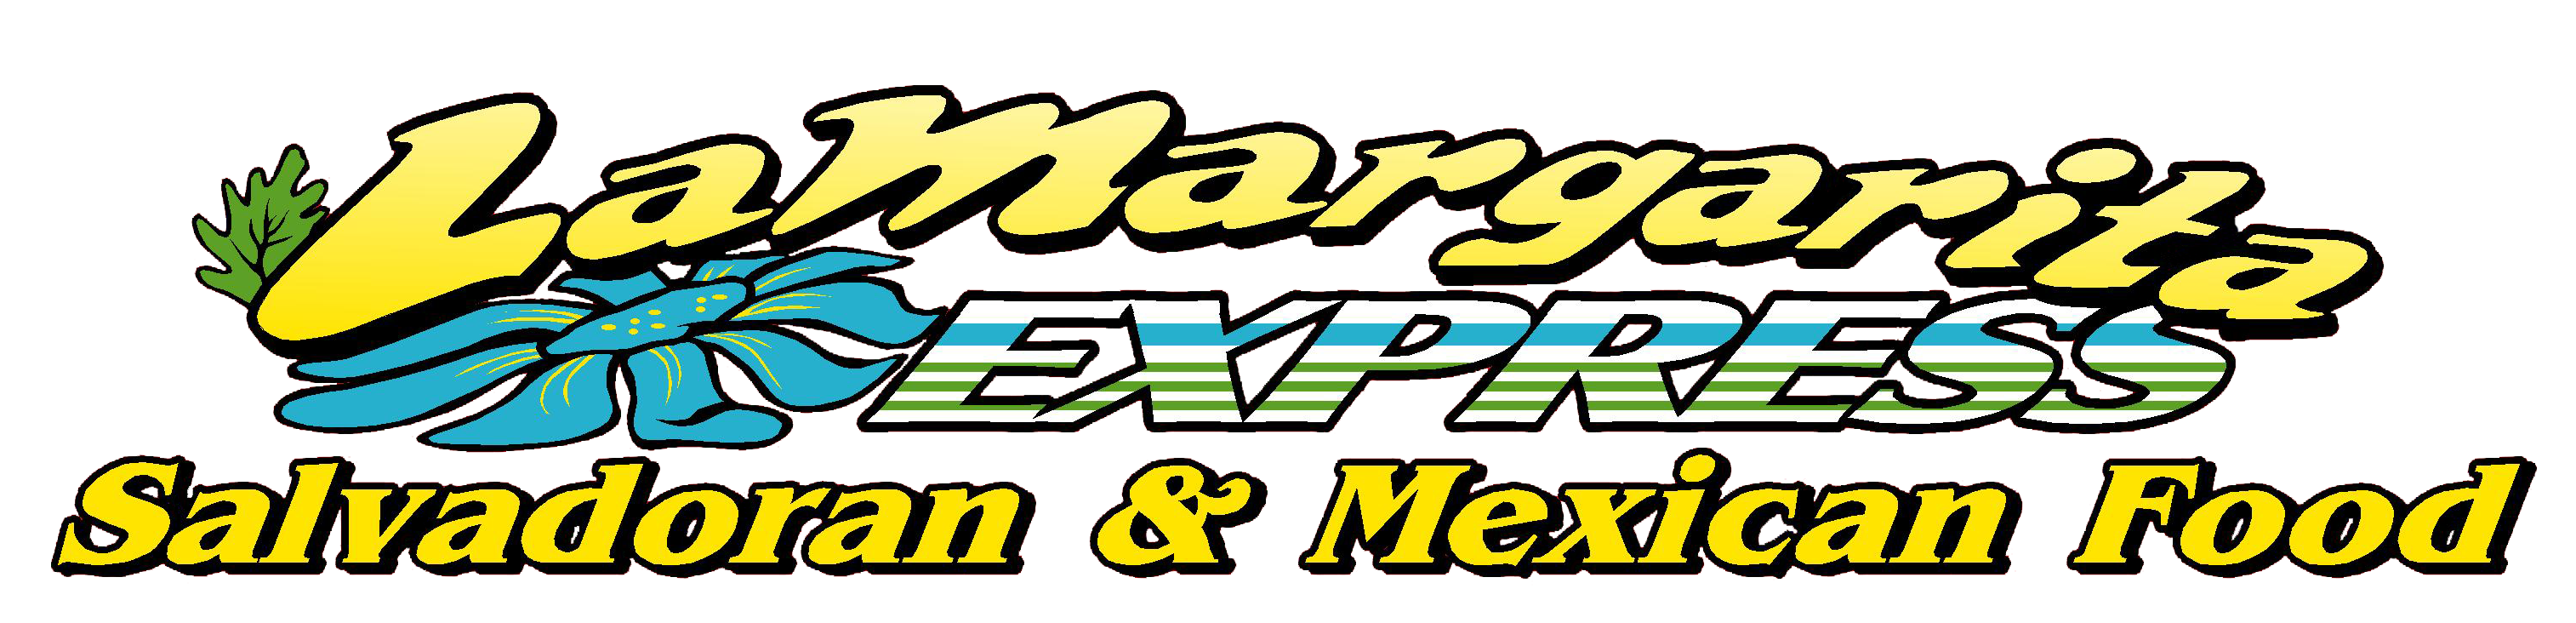 La Margarita Express Restaurant